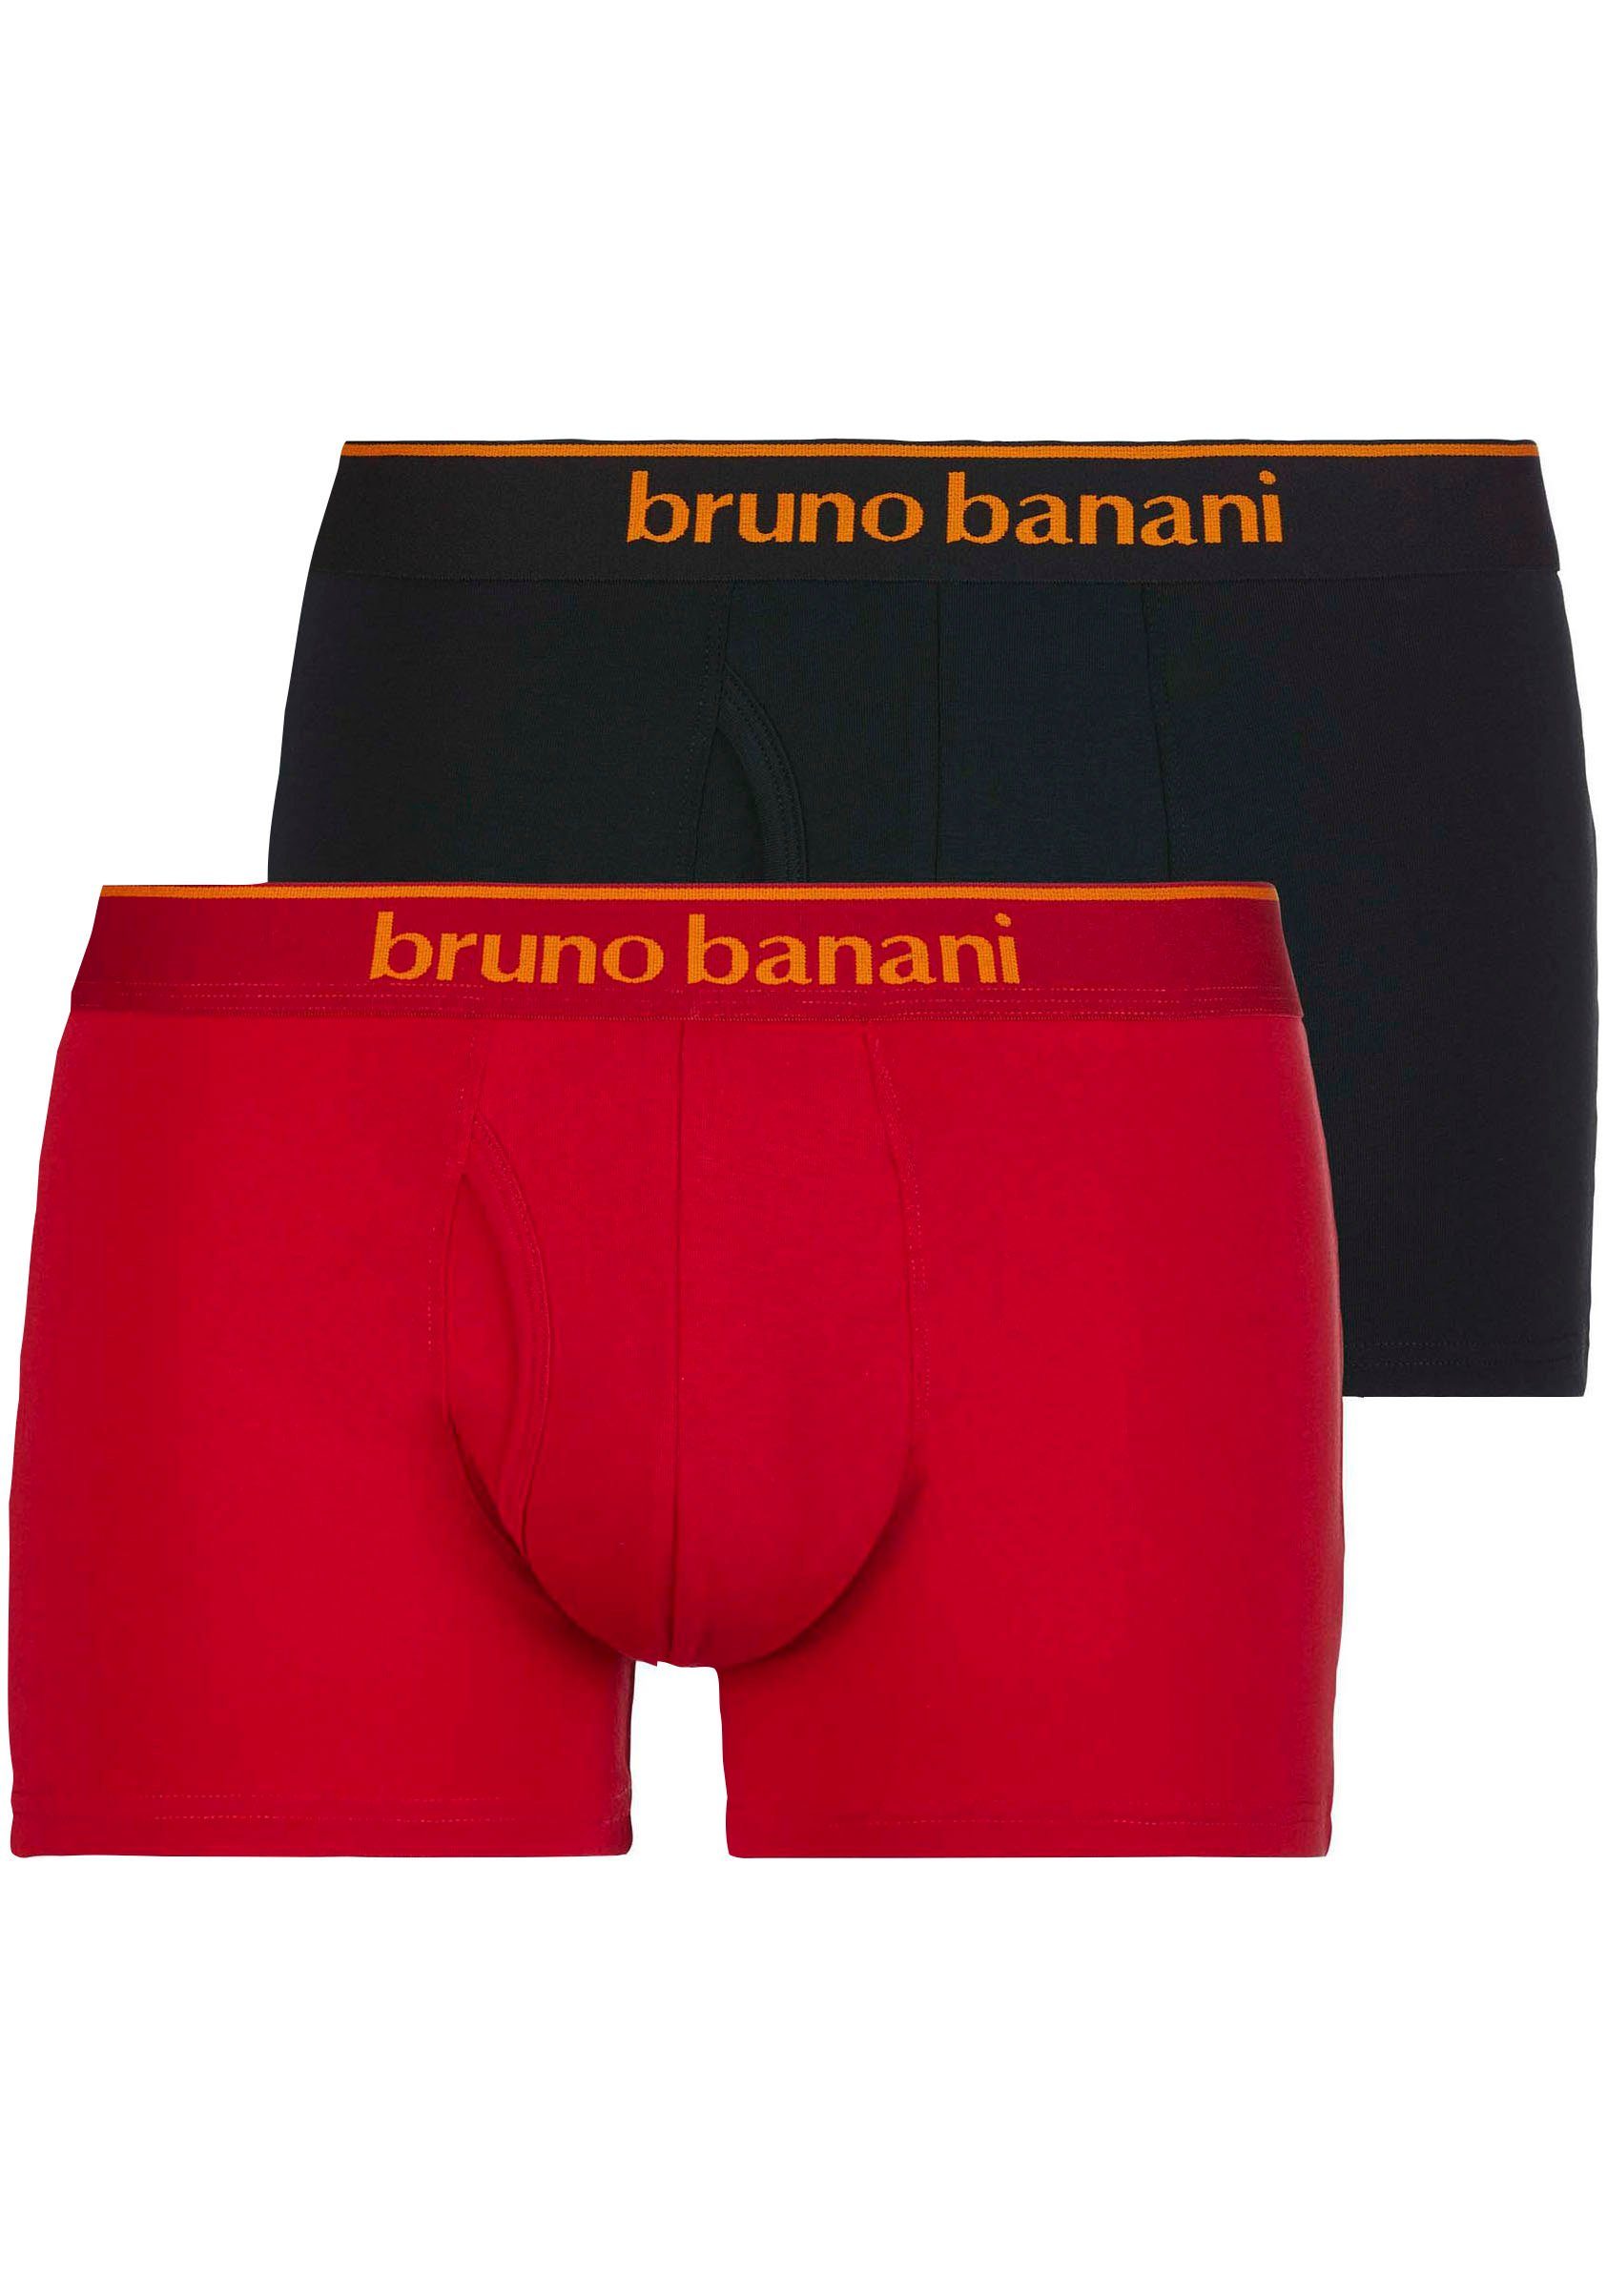 Bruno Banani Boxershorts Short 2Pack Quick Access (Packung, 2-St) Kontrastfarbene Details rot-schwarz